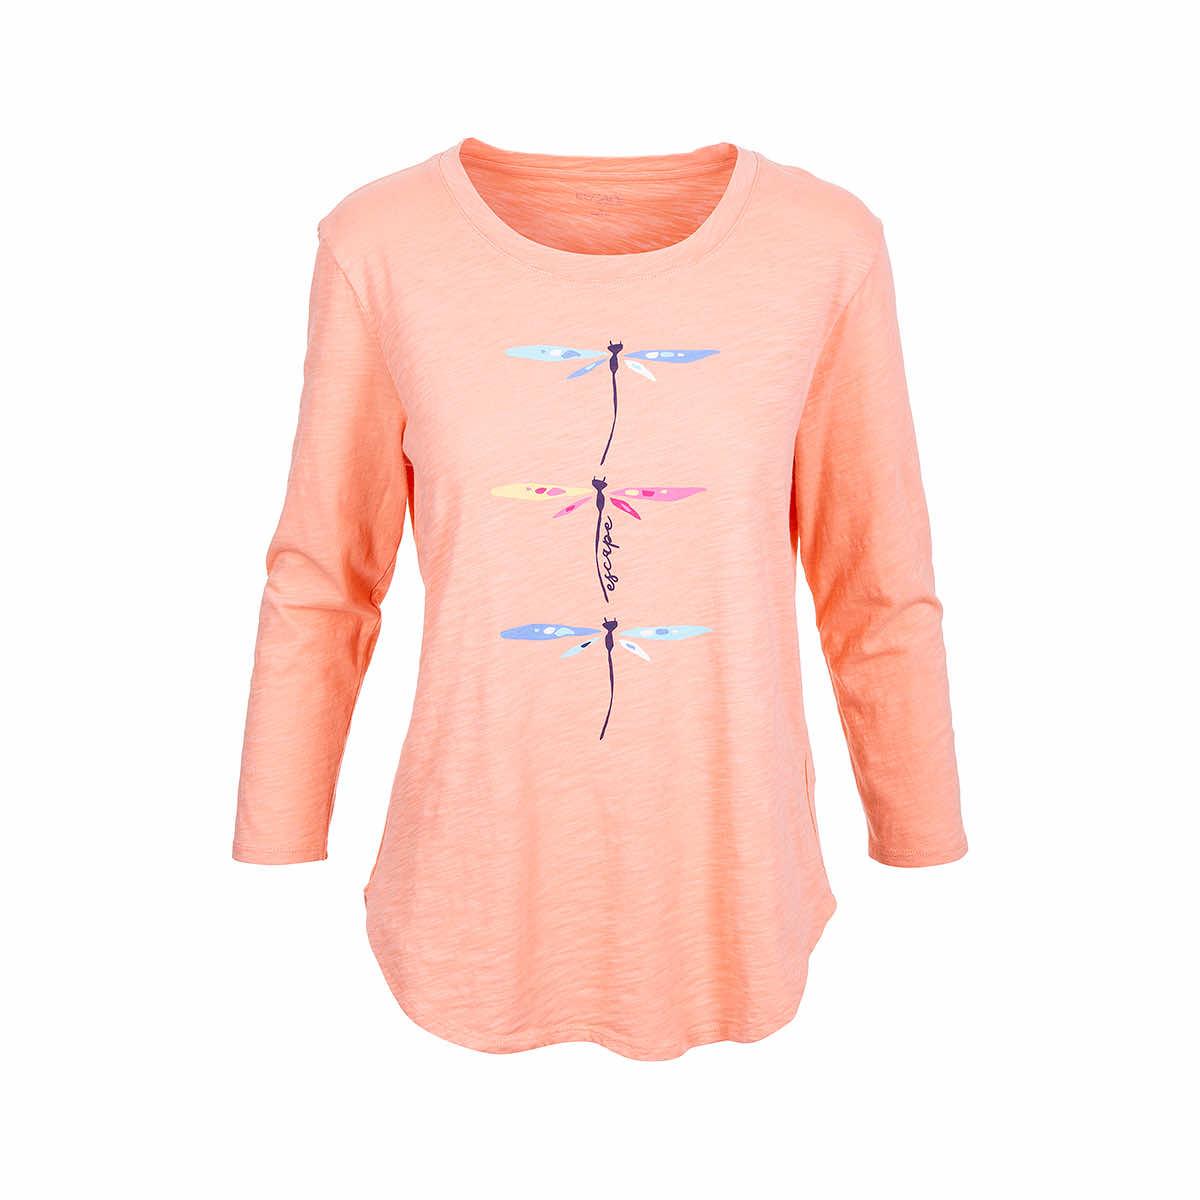  Women's Dragonfly Long Sleeve High- Low T- Shirt